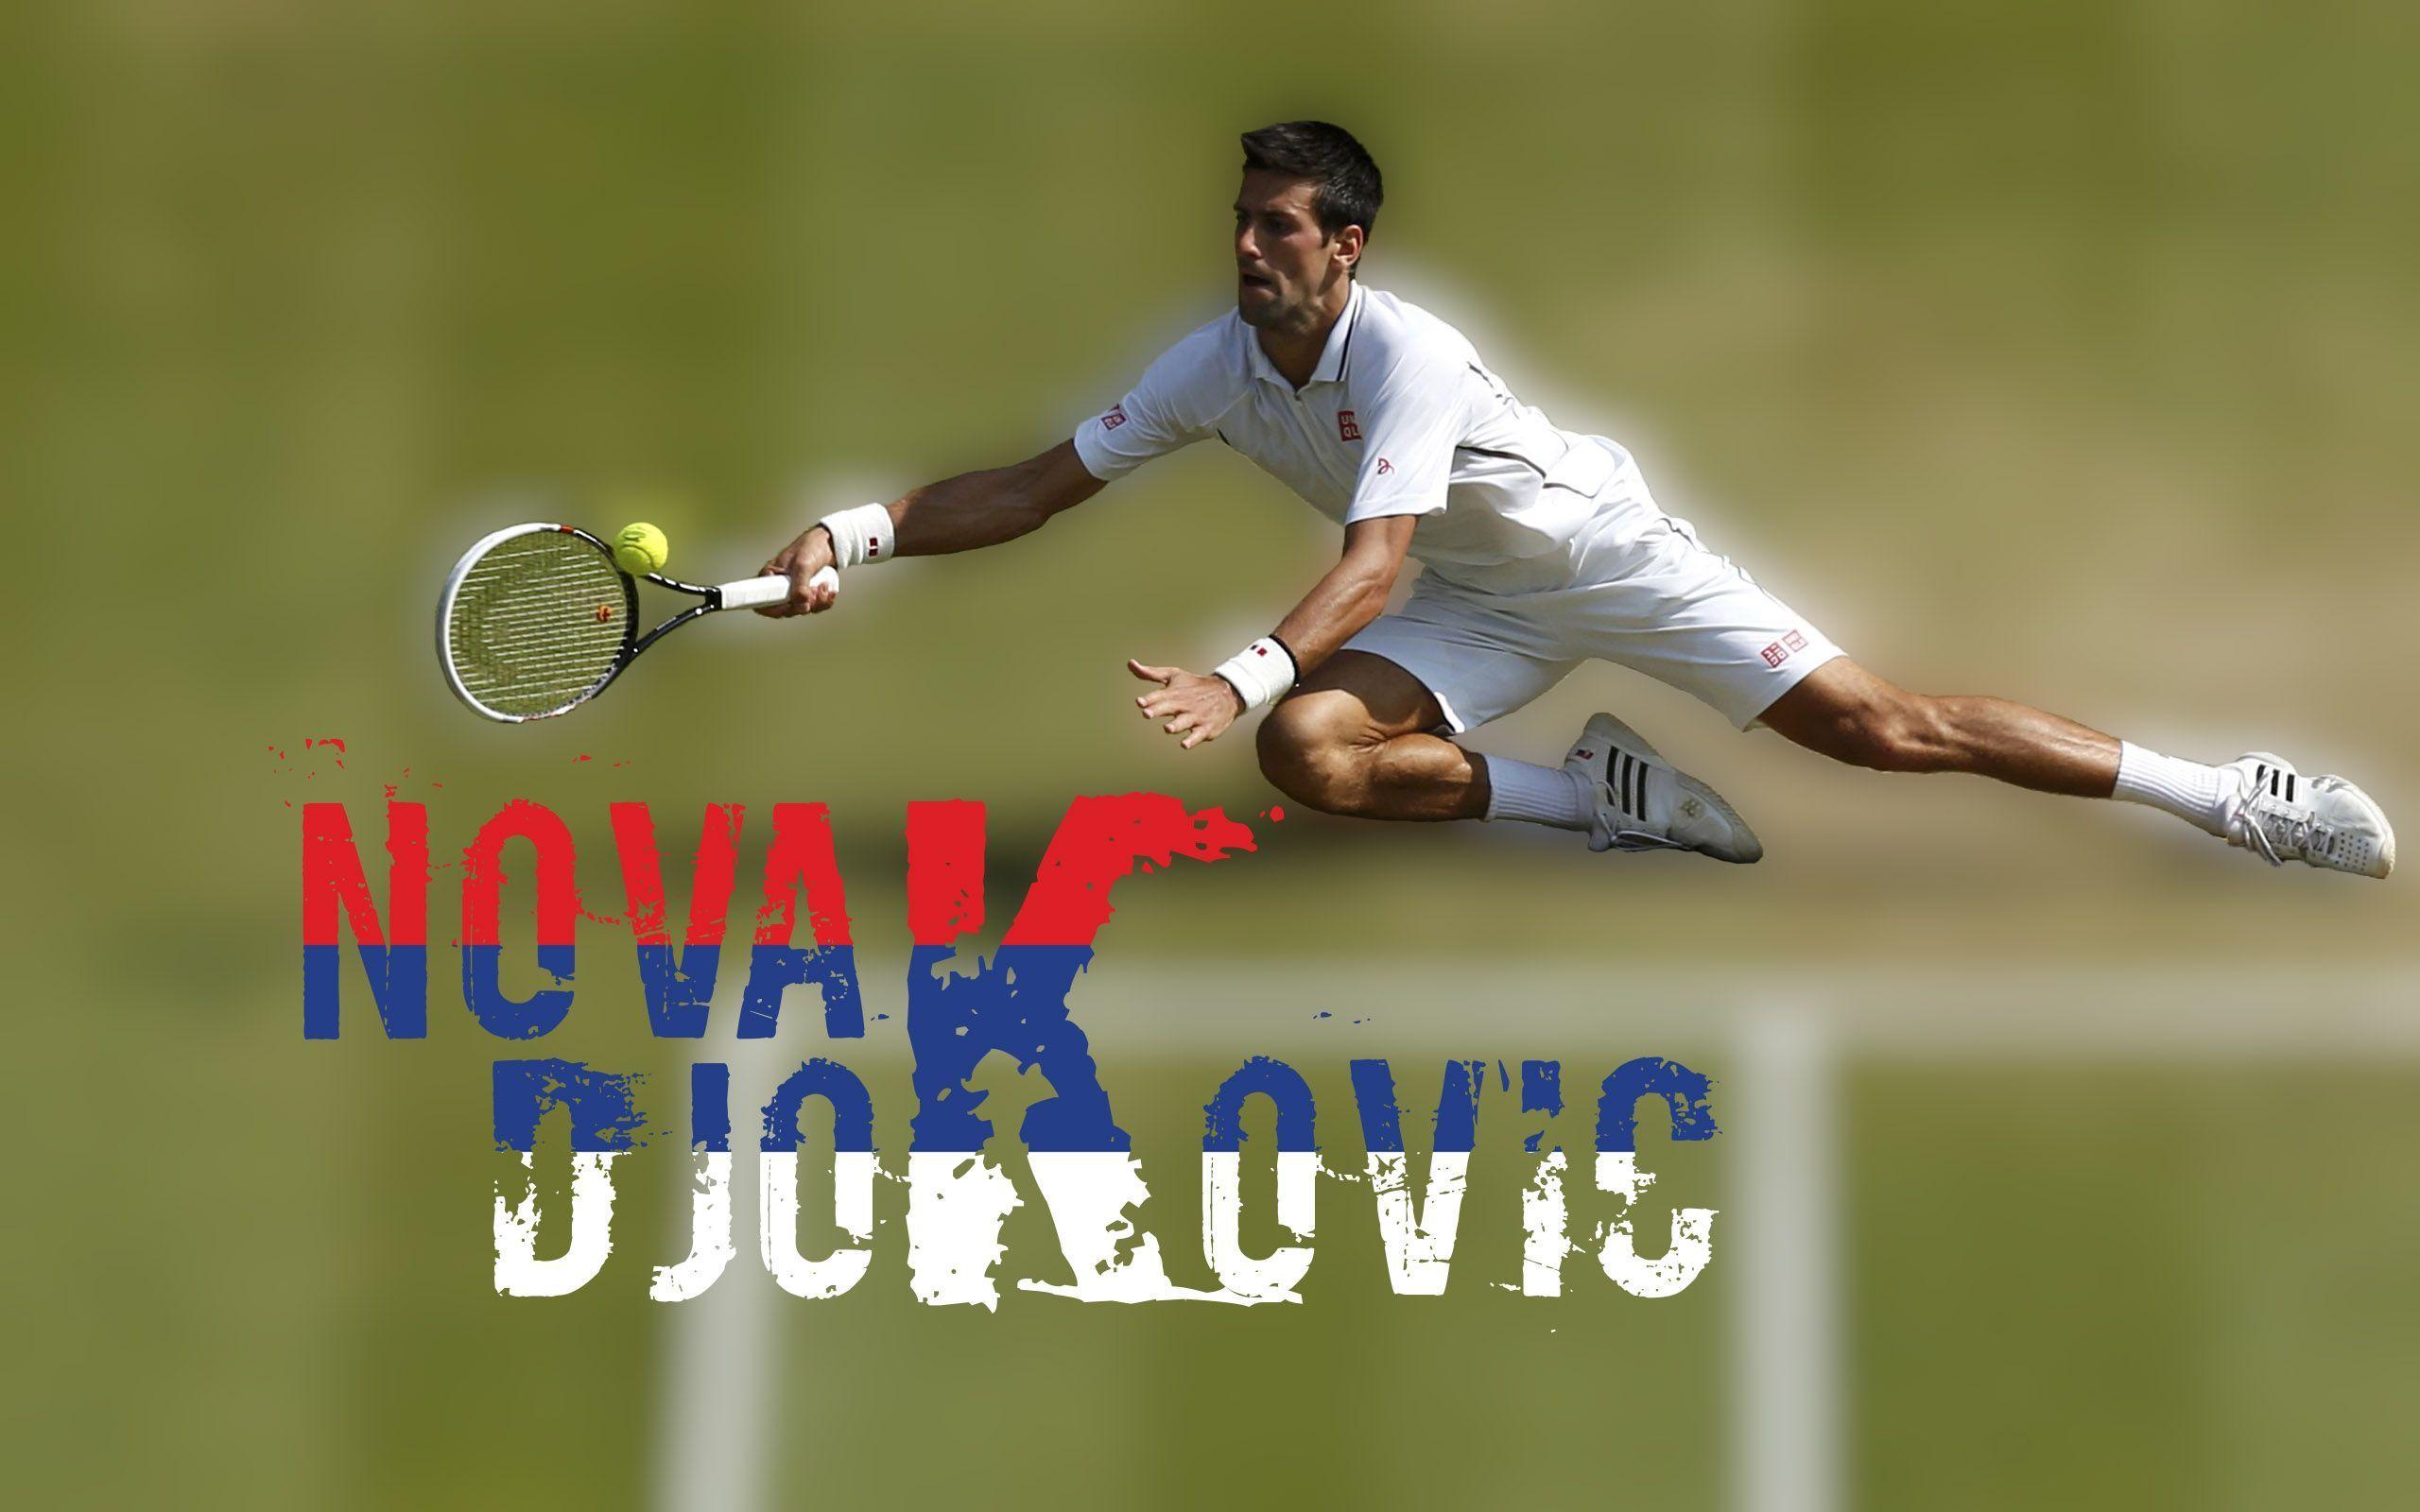 Novak Djokovic 2014 Wimbledon Wallpaper Wide or HD. Male